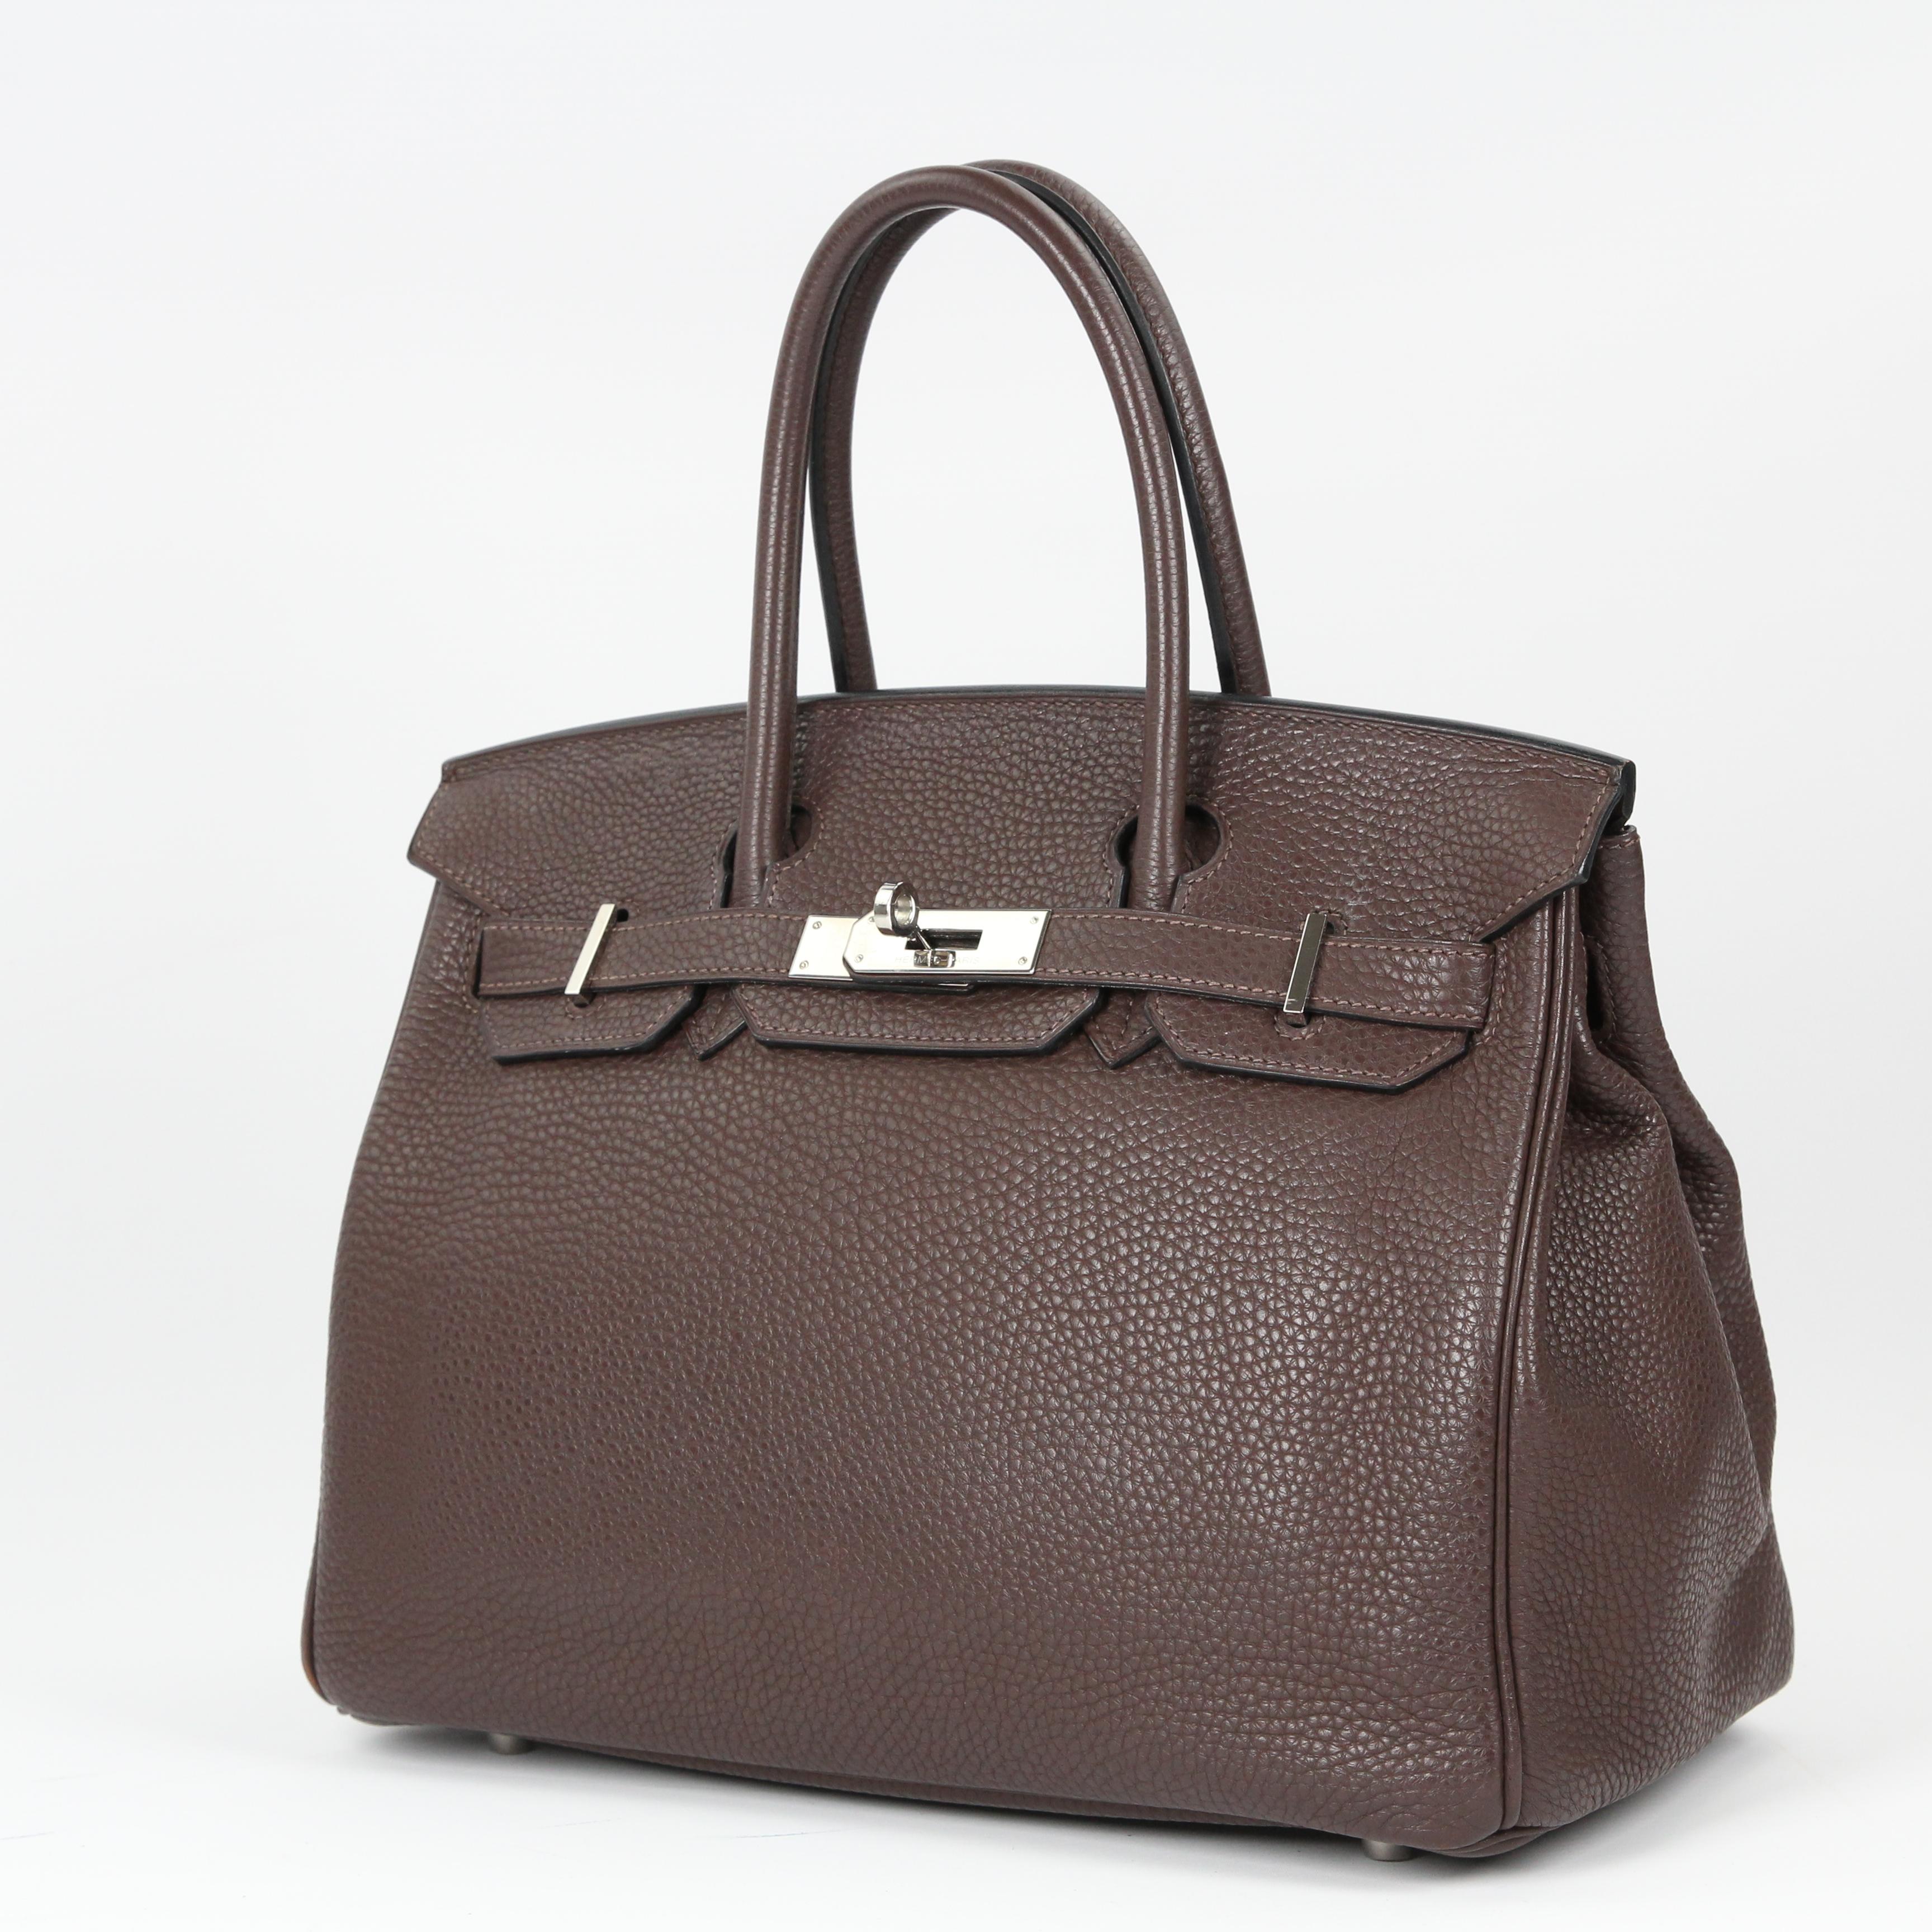 Hermès Birkin 30 leather handbag For Sale 5